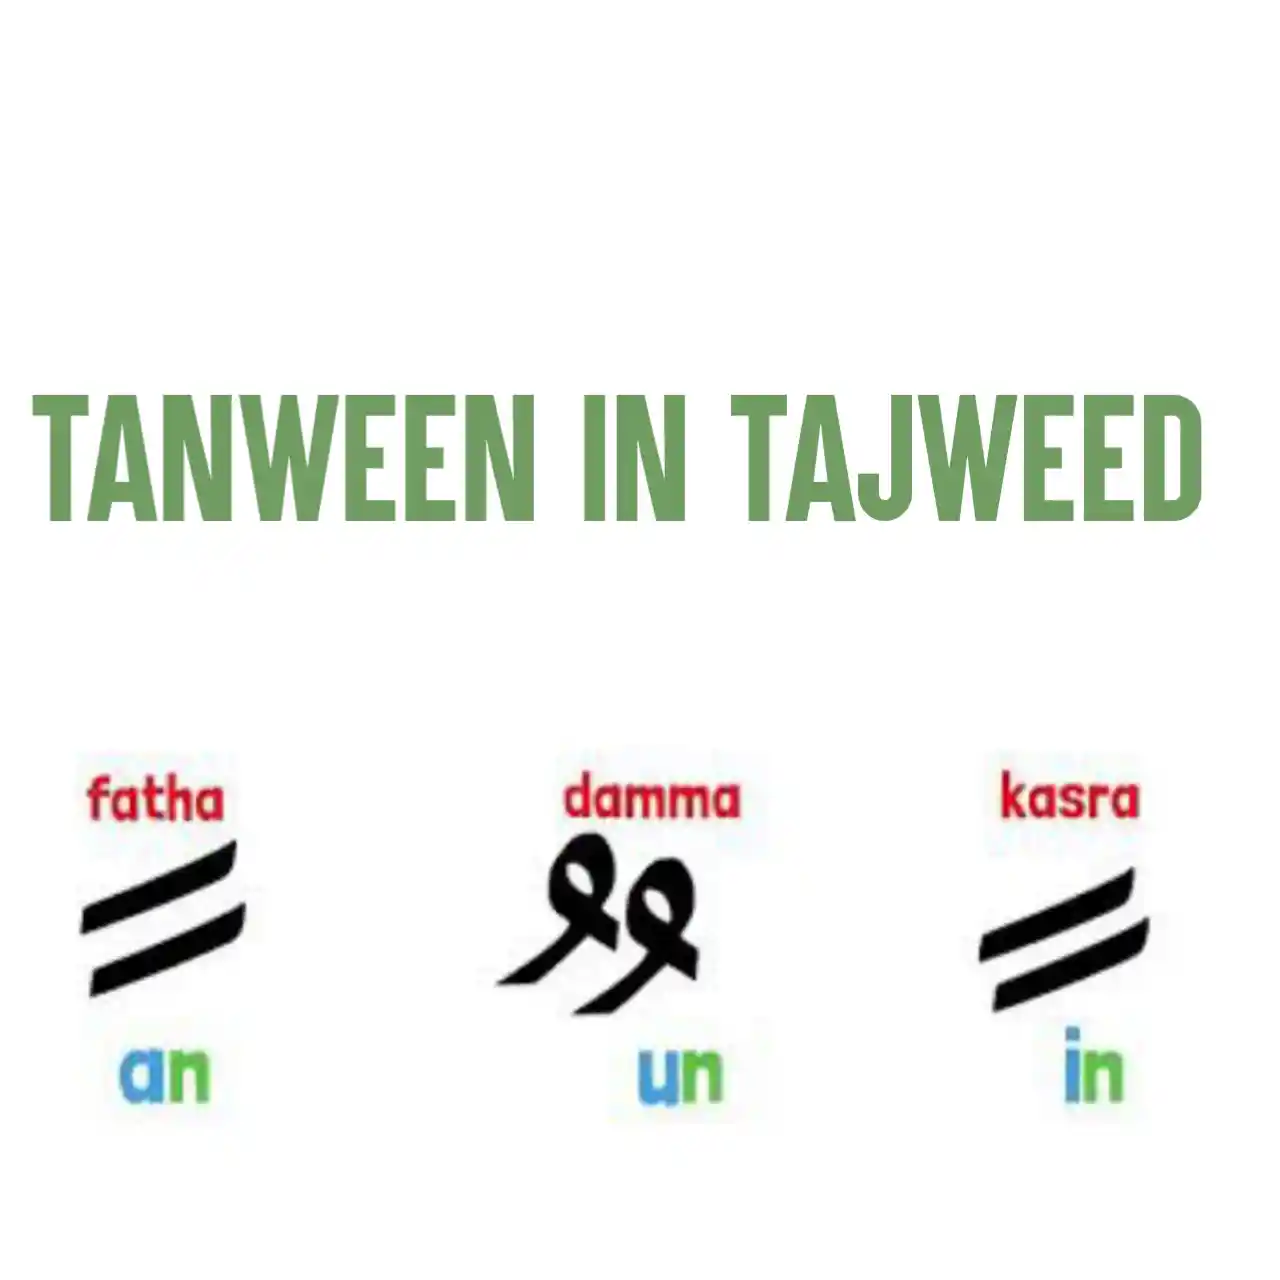 What Is Tanween In Tajweed